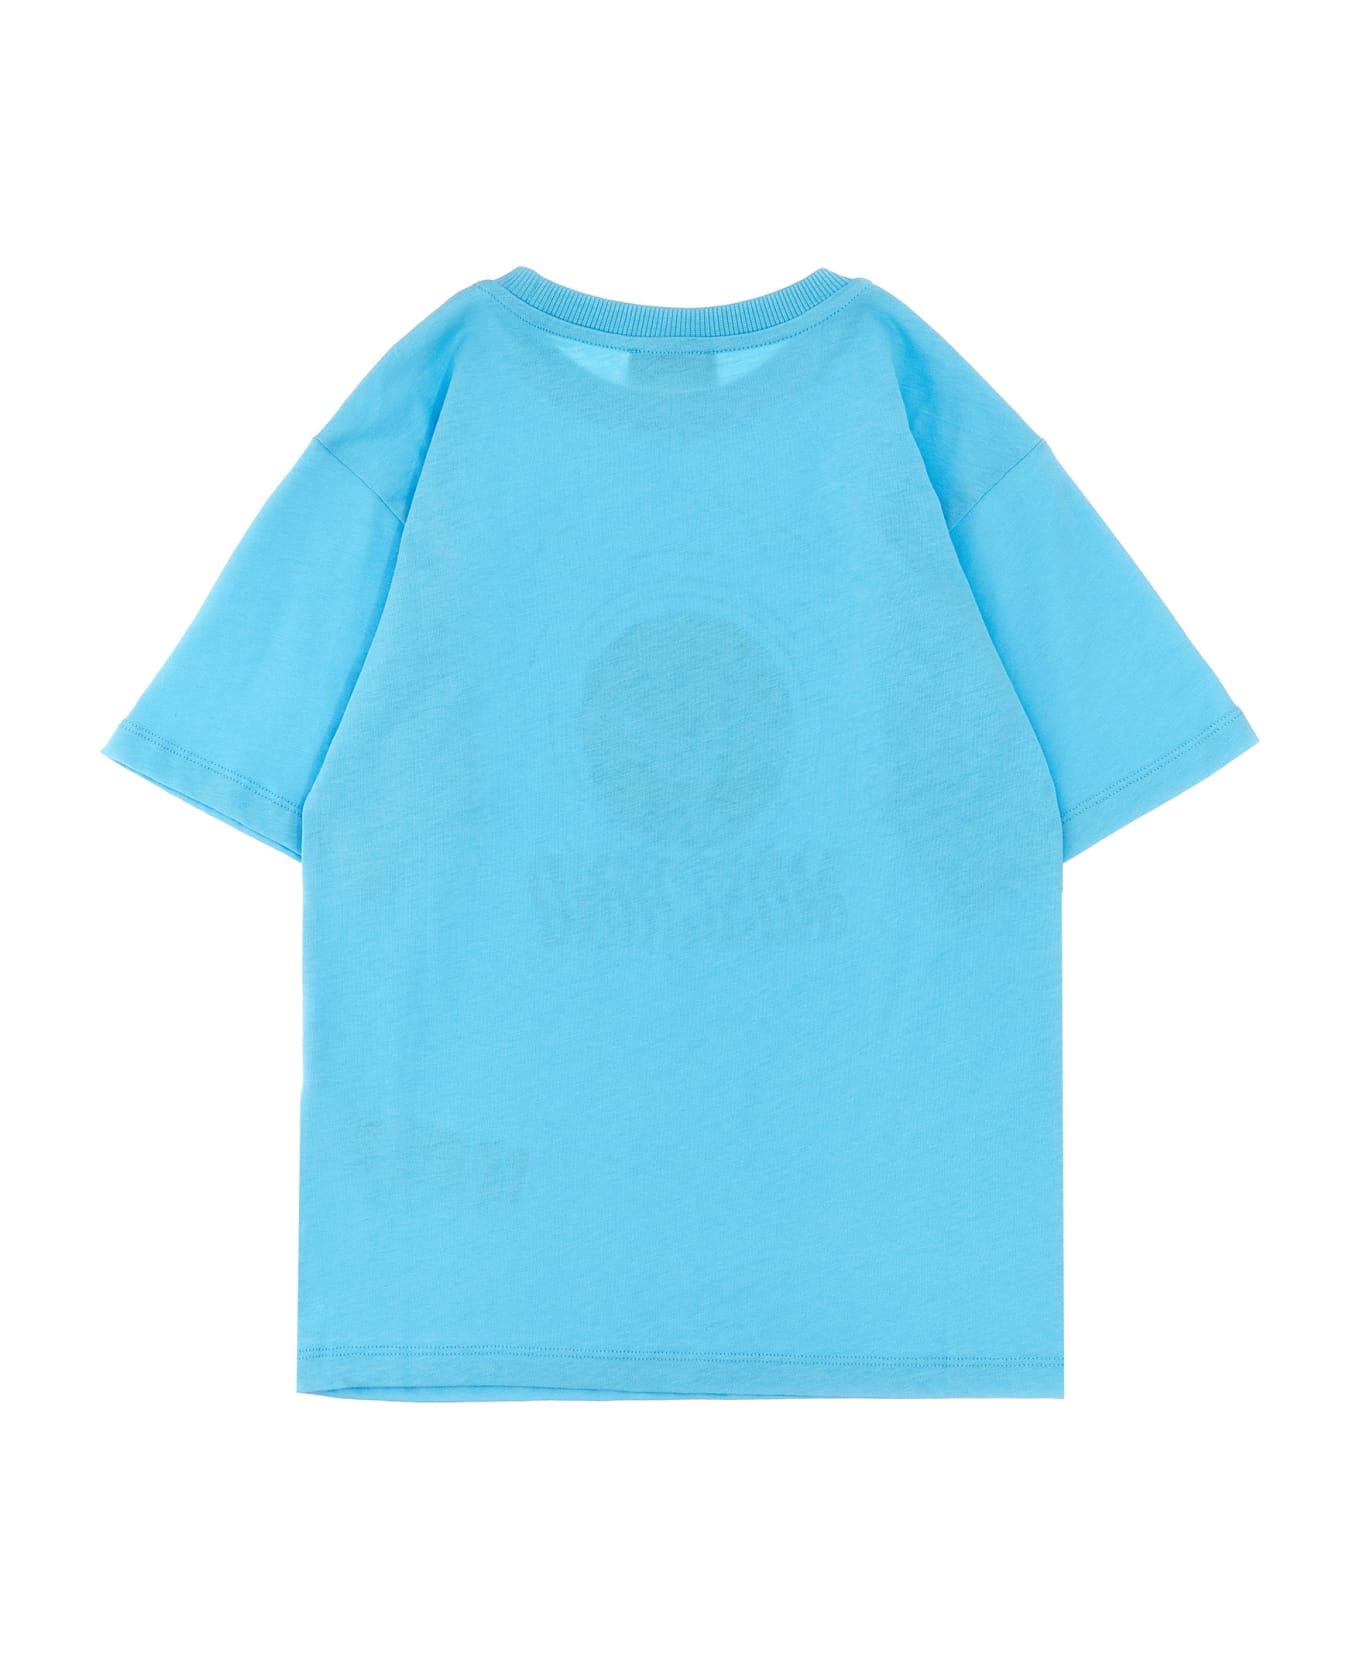 Moschino Logo Print T-shirt - Light Blue